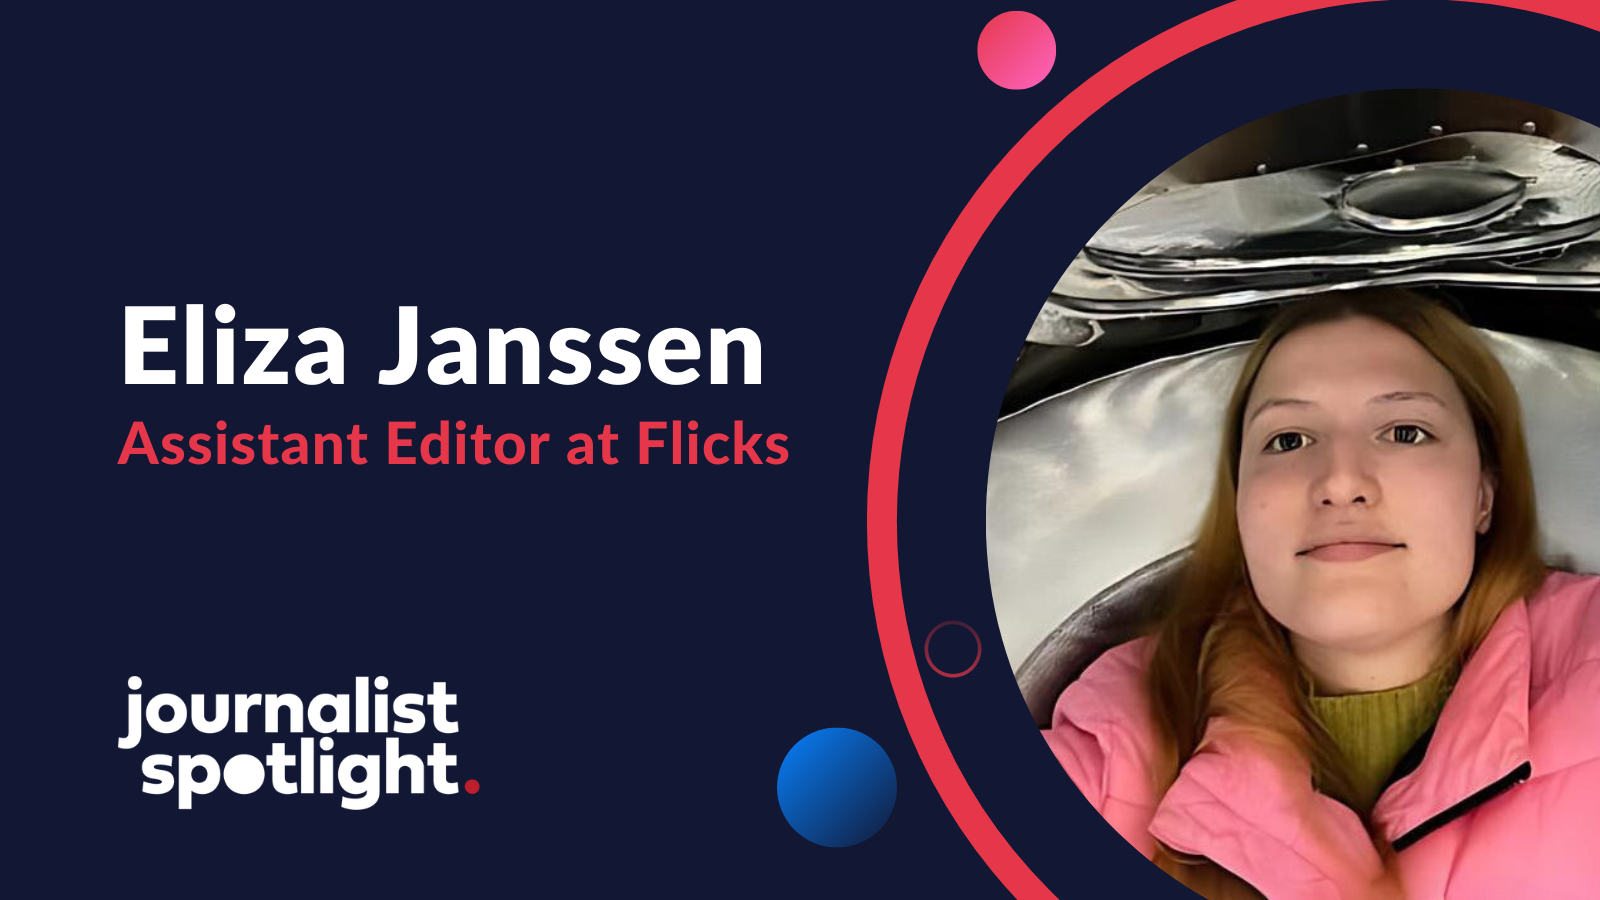 Journalist Spotlight | Interview with Eliza Janssen, Assistant Editor at Flicks